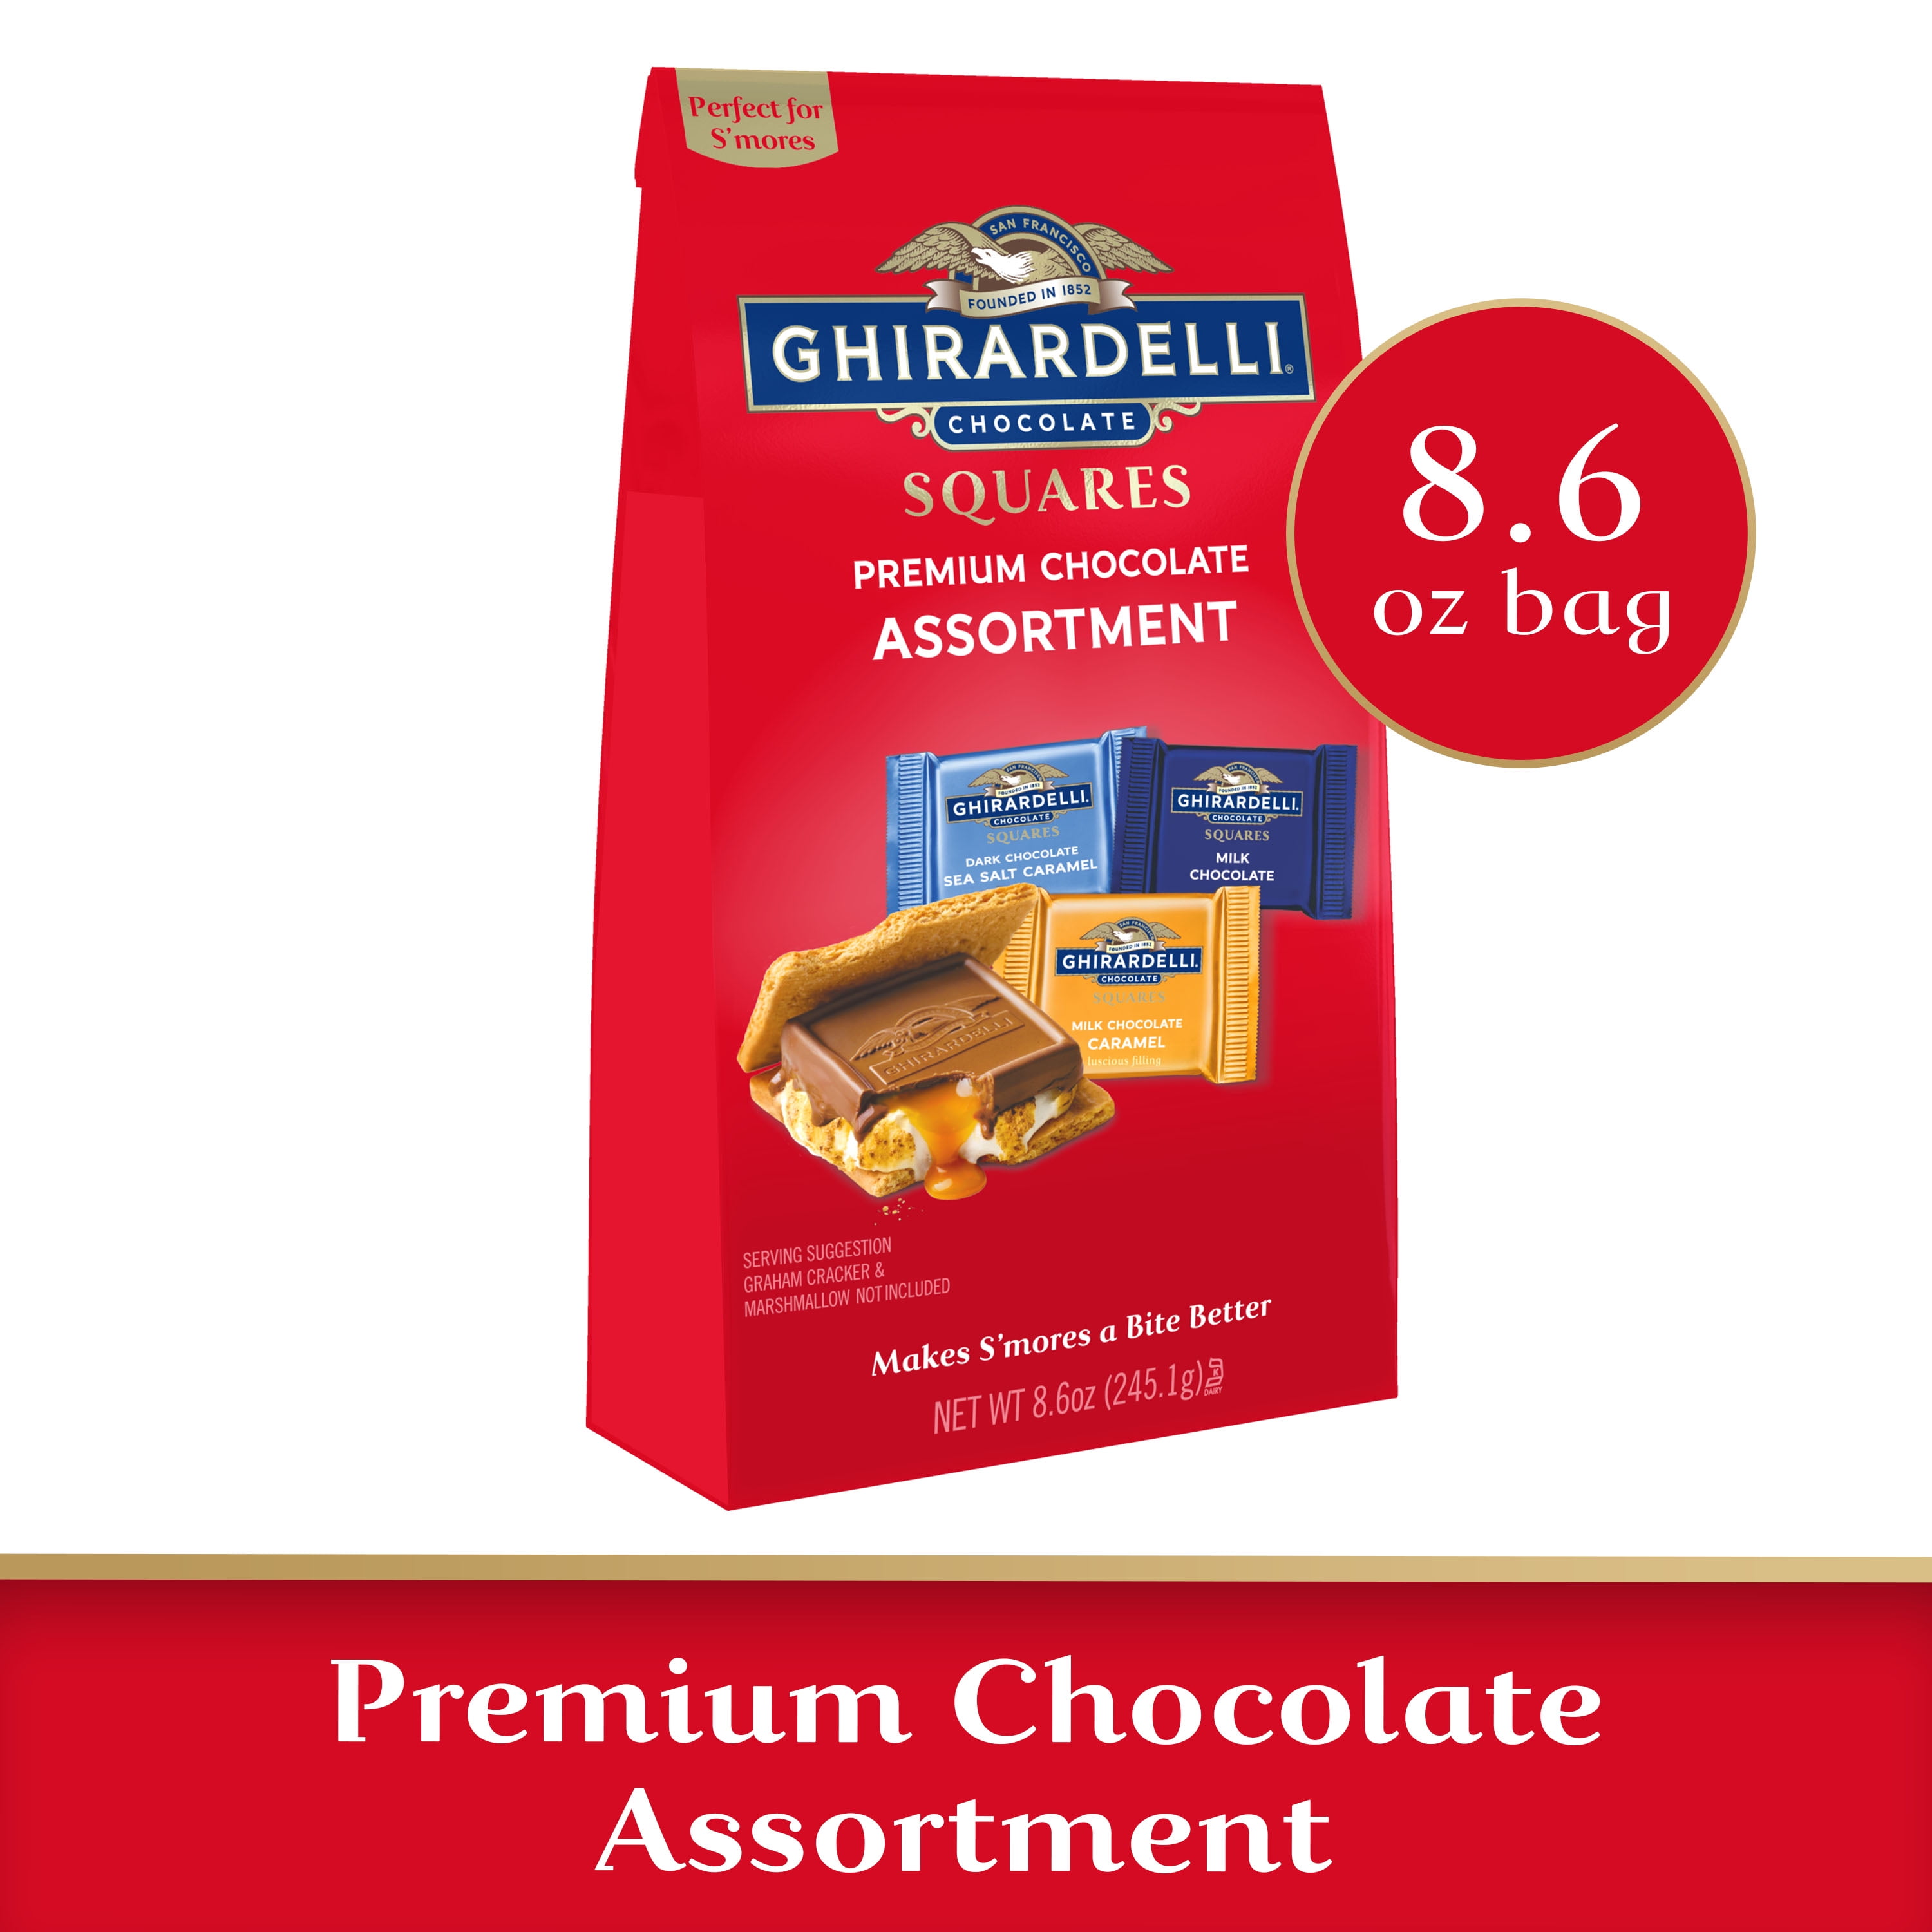 Ghirardelli Perfect for S'mores Premium Chocolate Assortment Squares - 8.6 Oz.